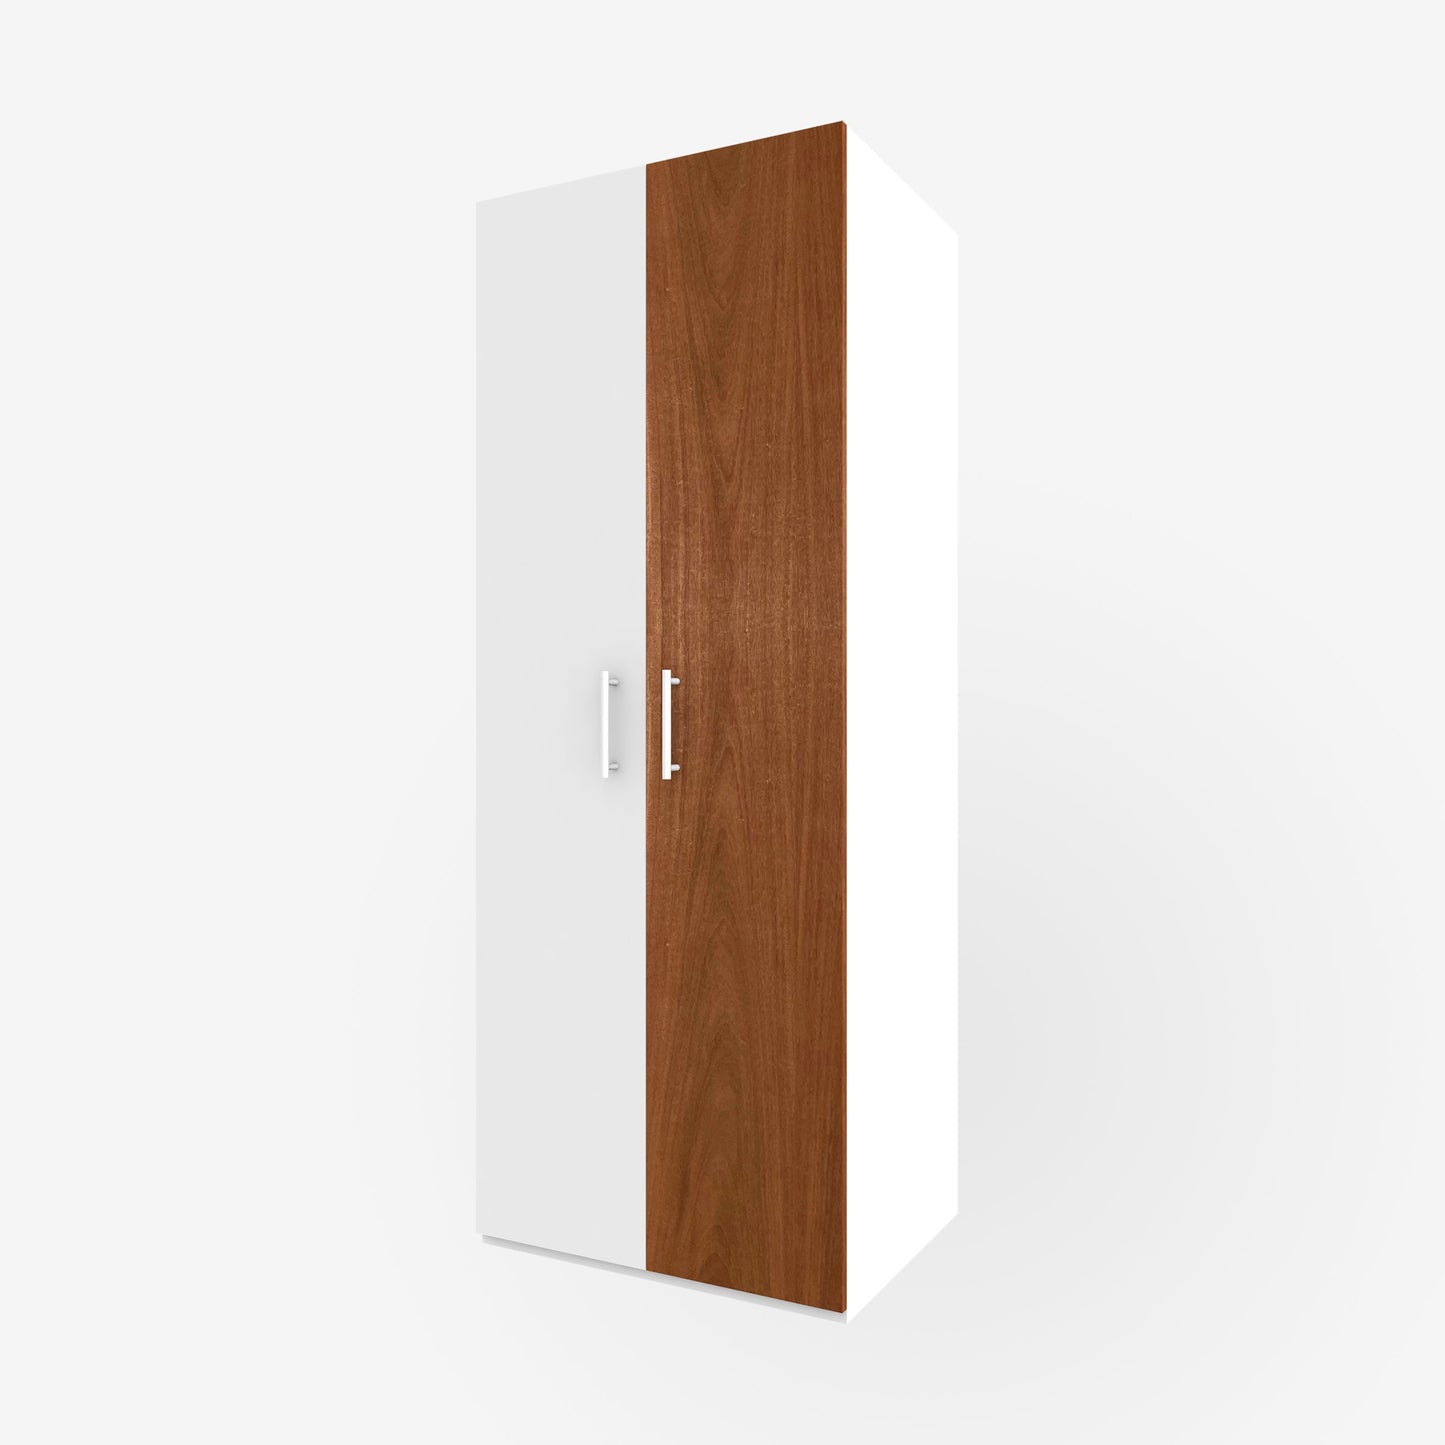 15" x 79" real wood veneer mahogany slab door for Ikea or Swedeboxx pax closet cabinet